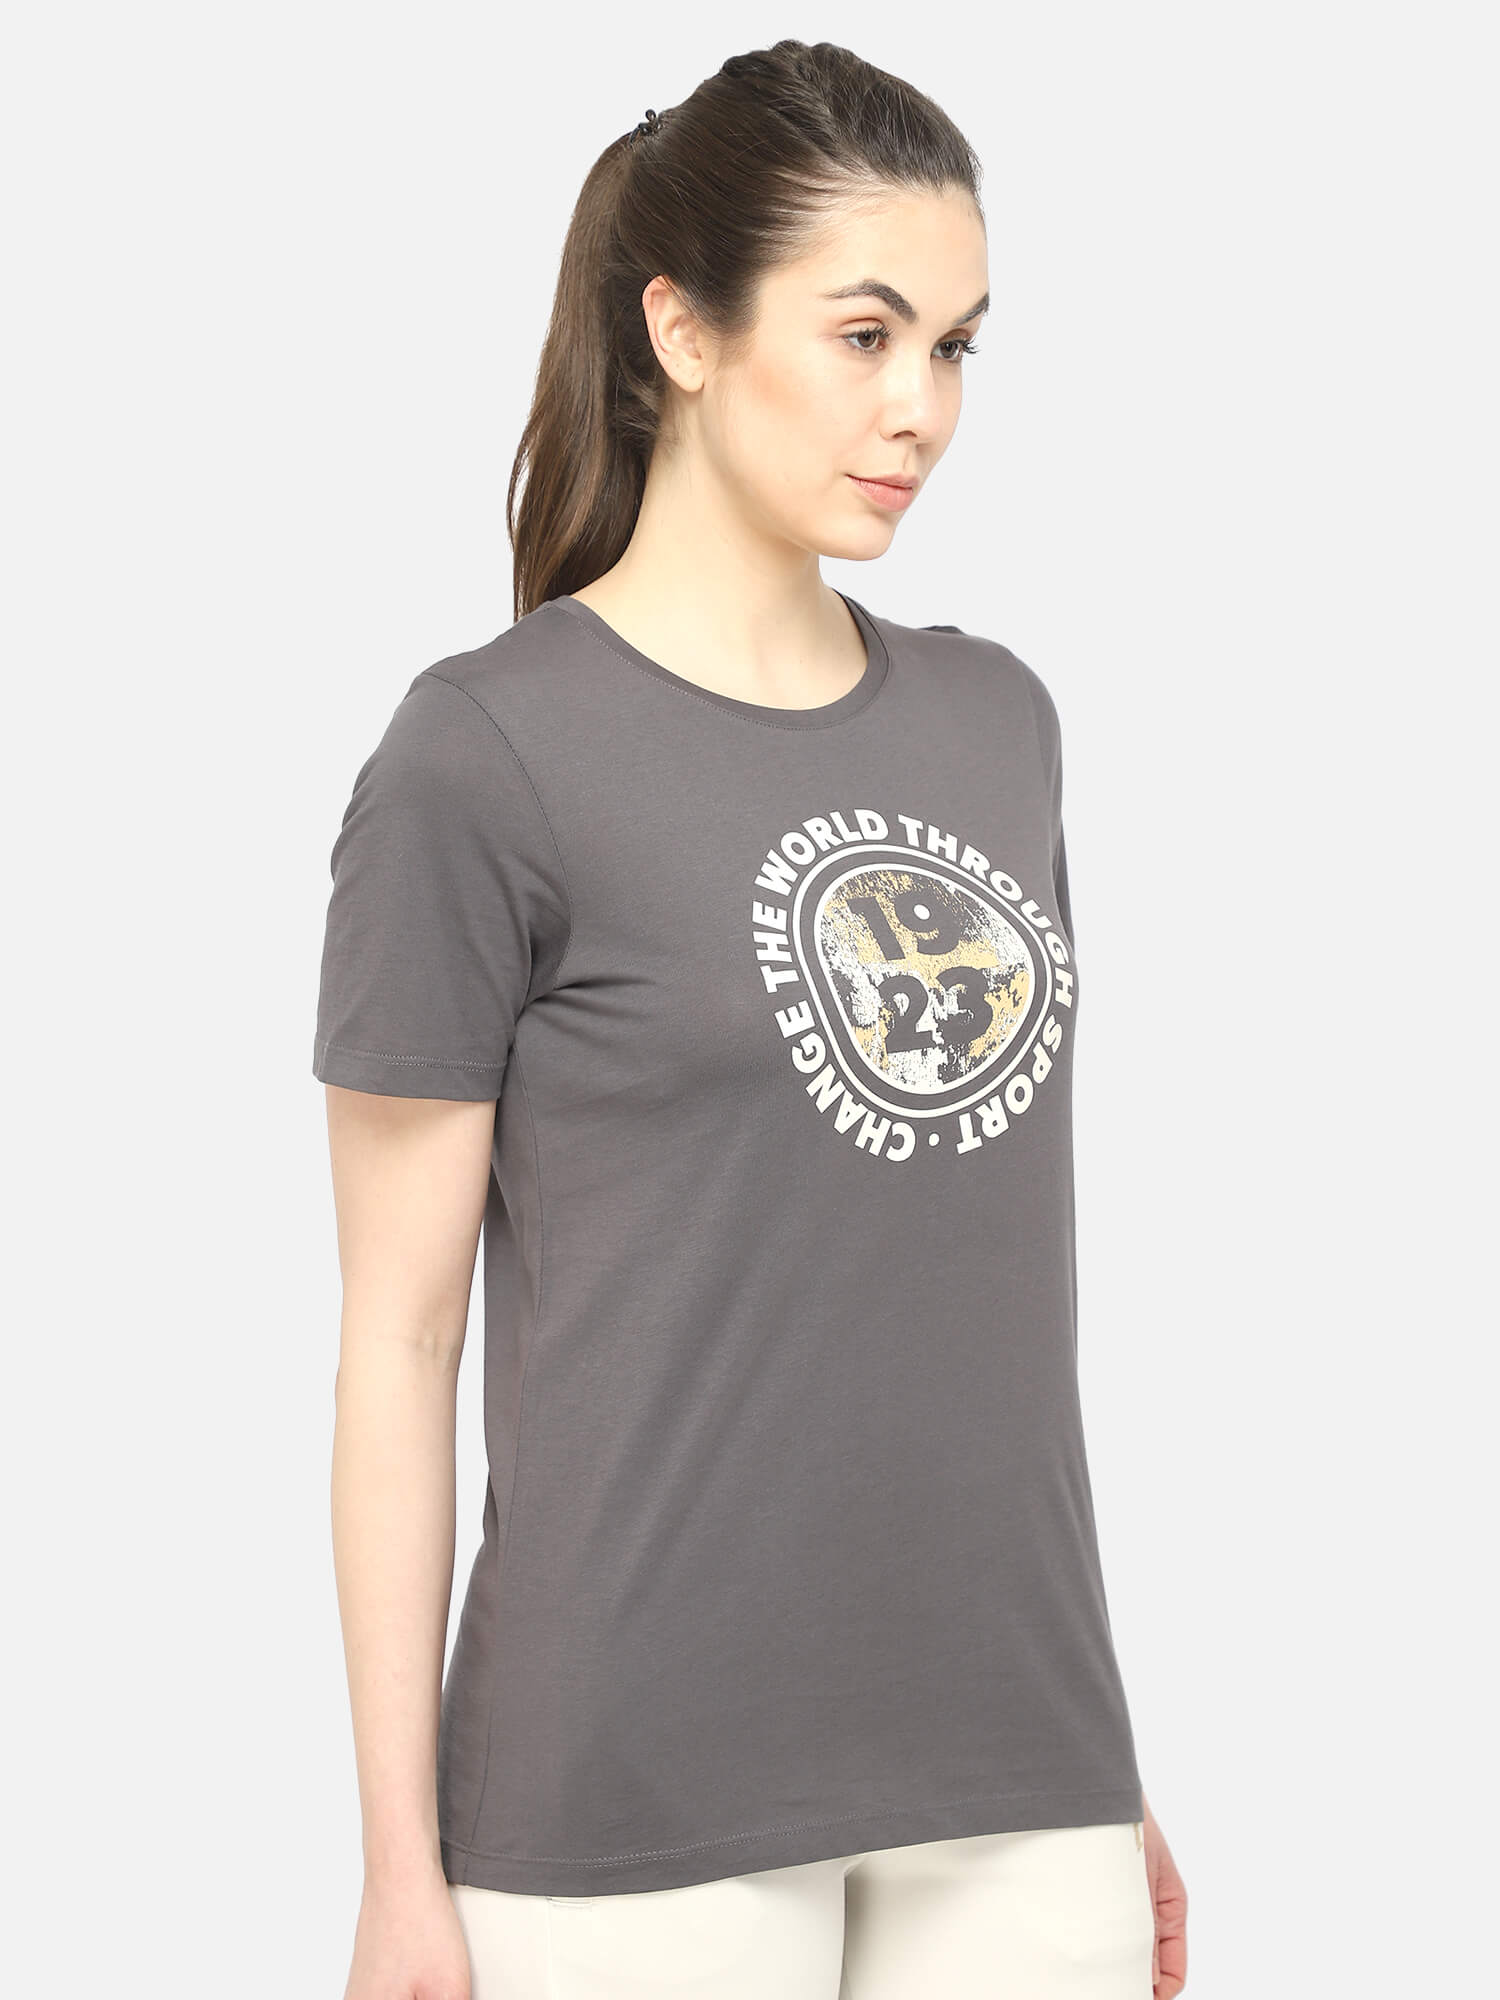 Blake Grey T-Shirt for Women